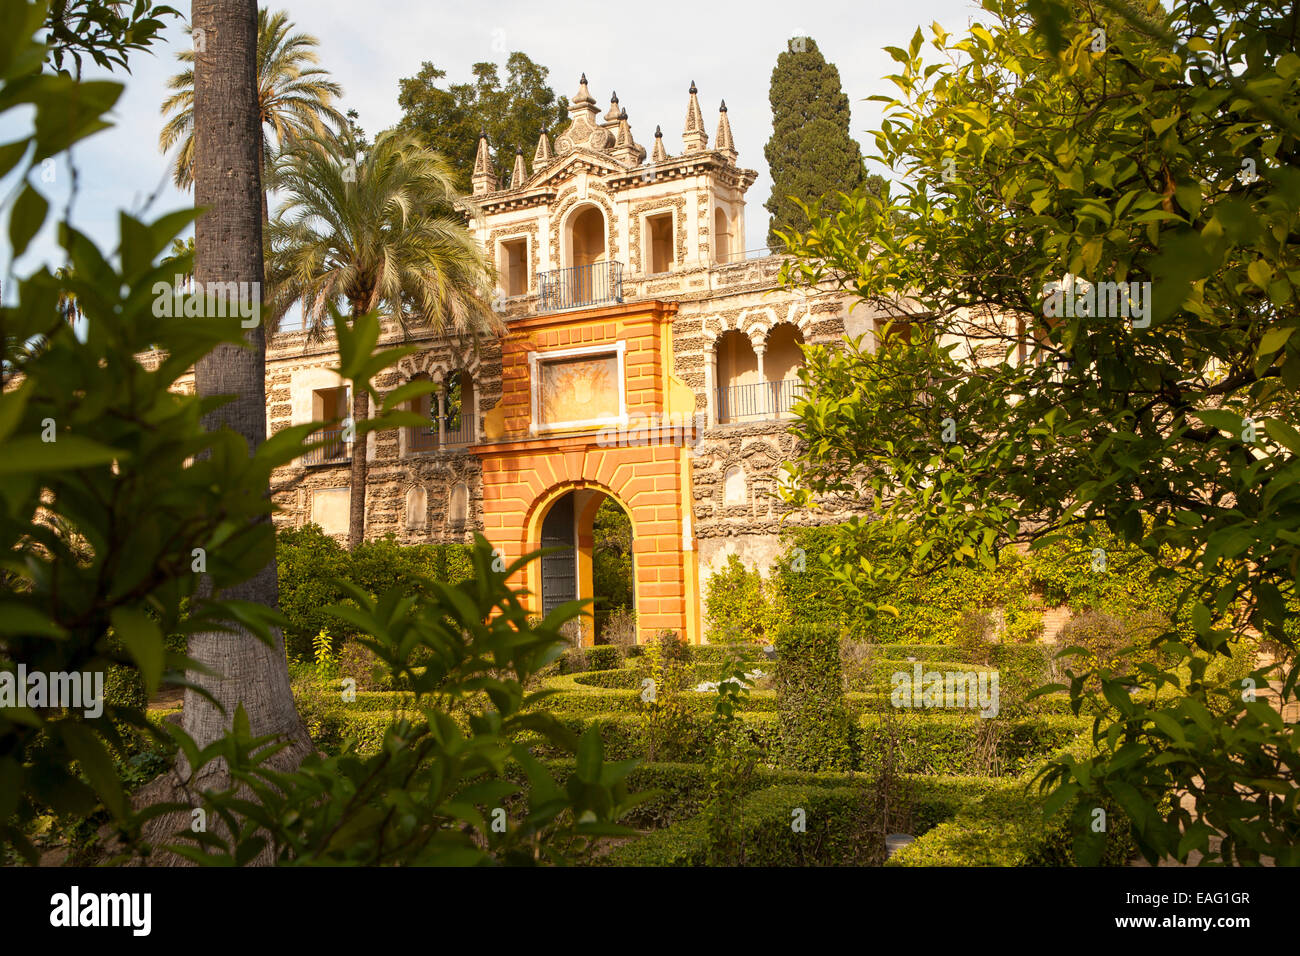 Gardens of the Alcazar palaces, Seville, Spain Stock Photo